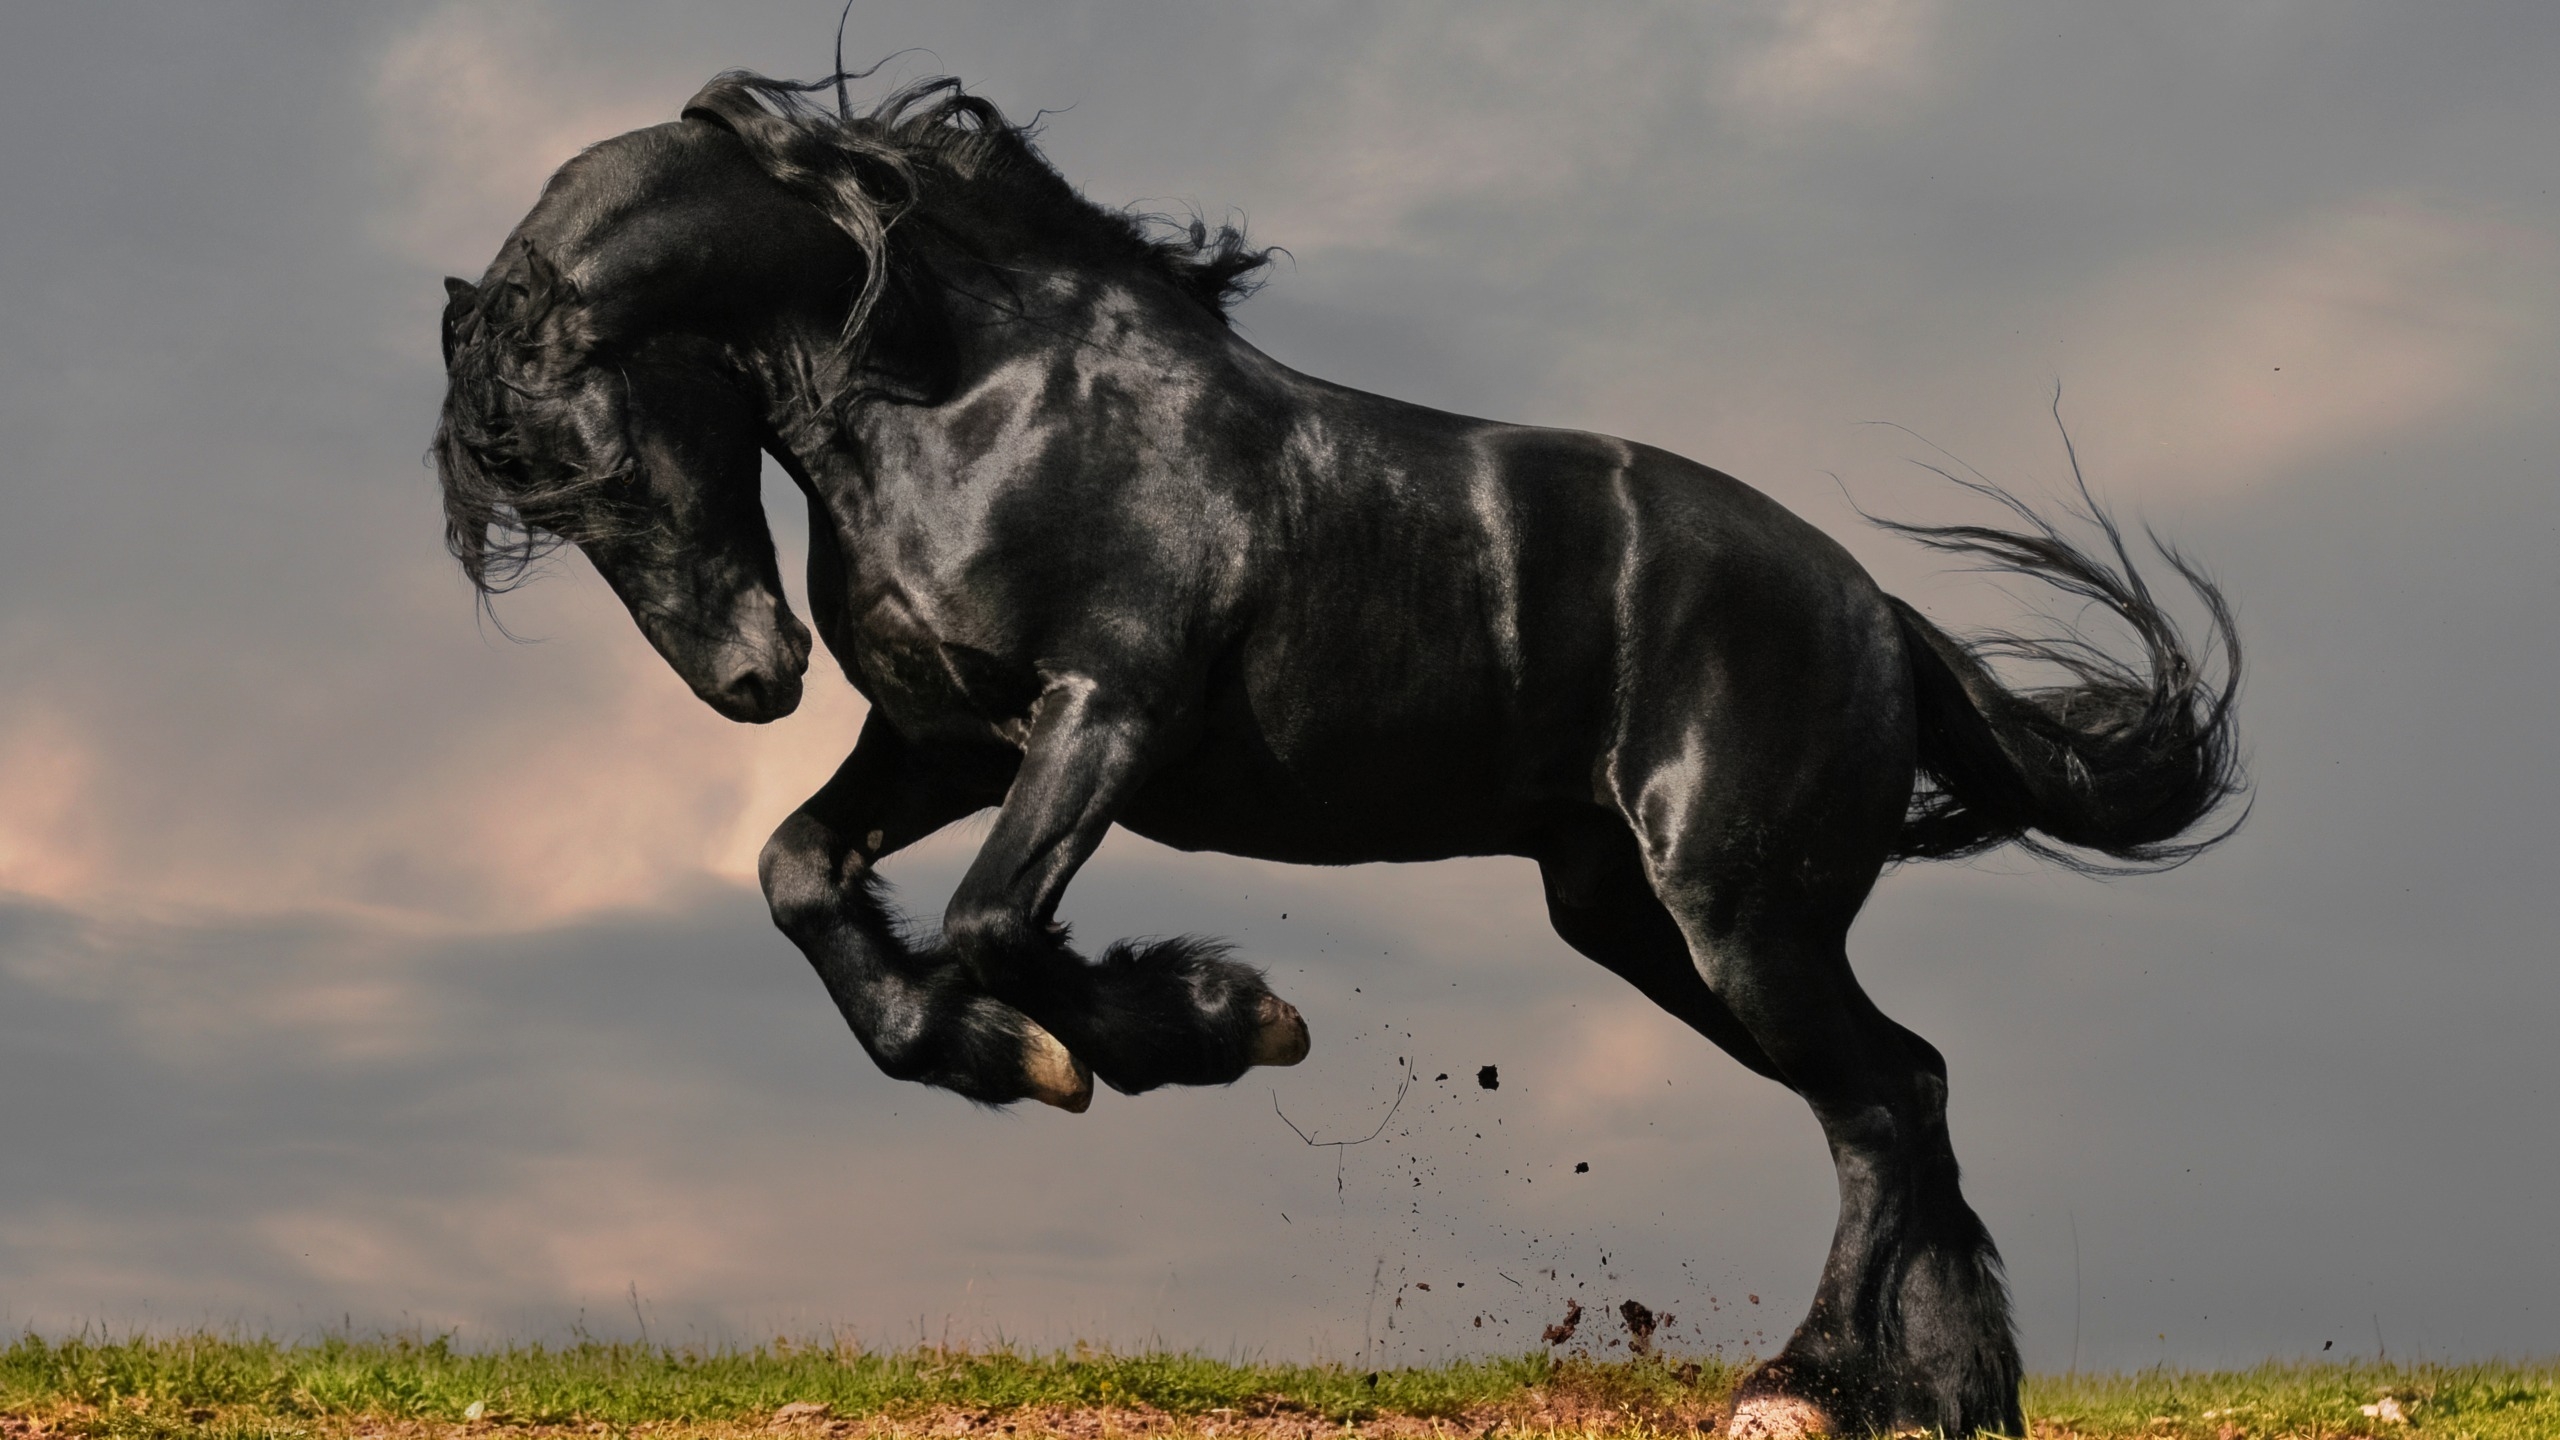 Gorgeous Black Horse for 2560x1440 HDTV resolution